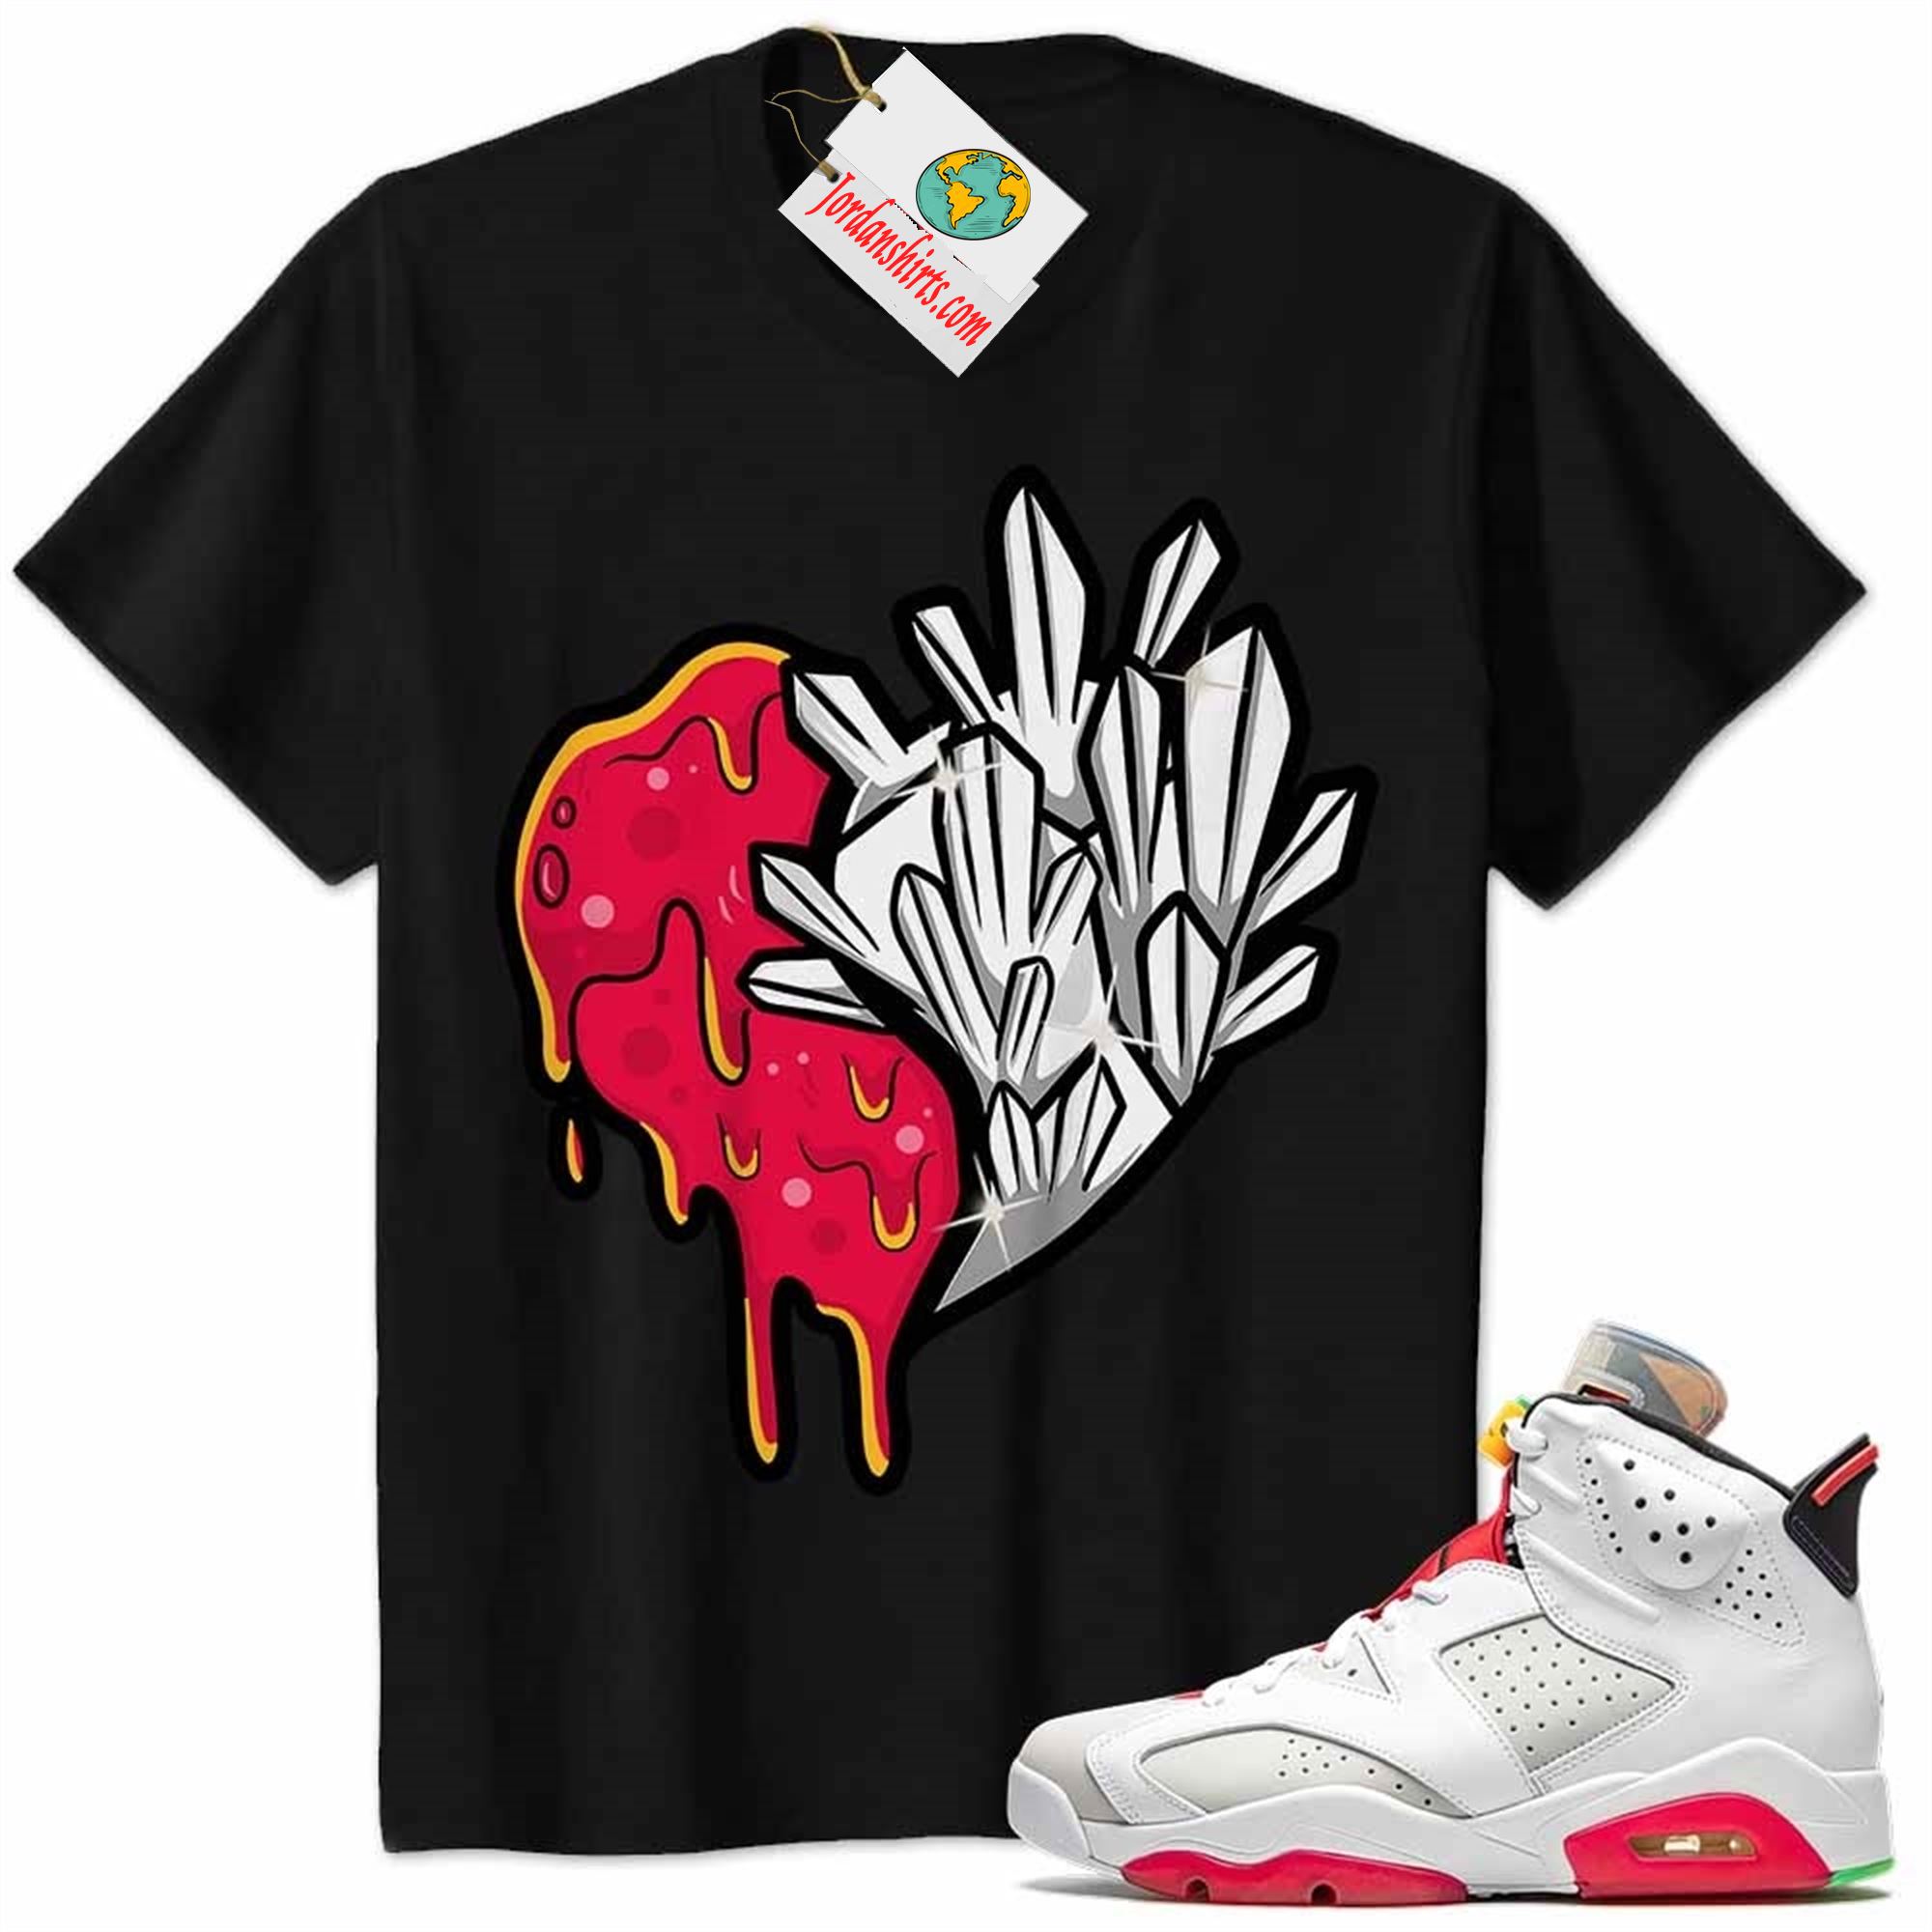 Jordan 6 Shirt, Crystal And Melt Heart Black Air Jordan 6 Hare 6s Plus Size Up To 5xl